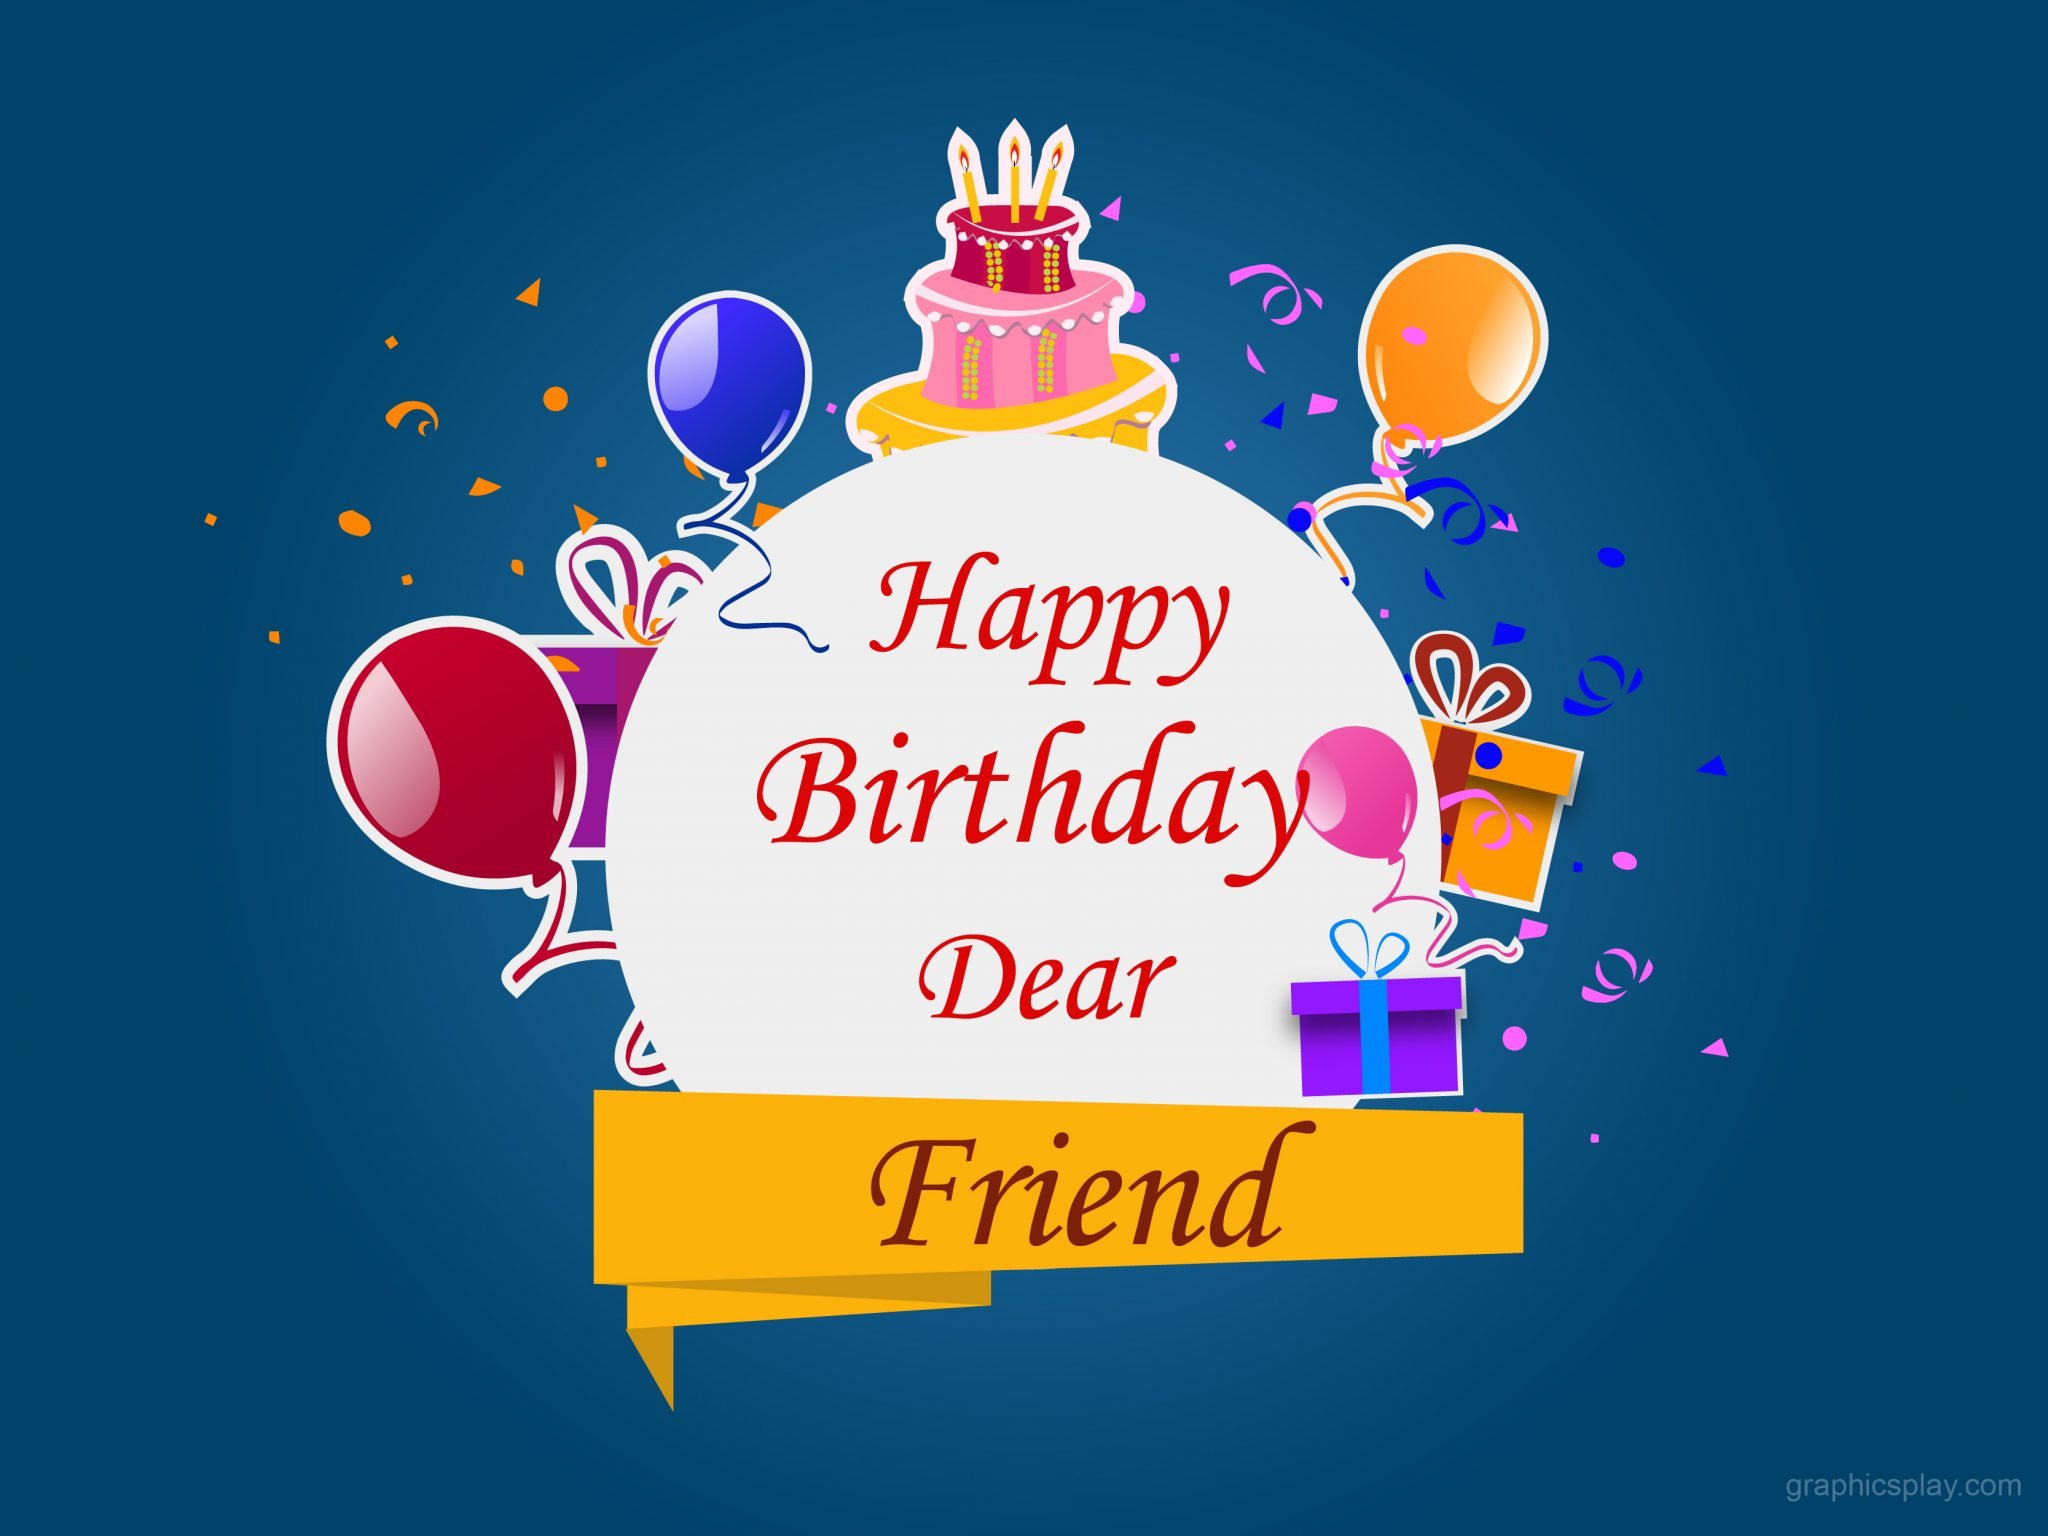 Happy Birthday Dear Friend Greeting - GraphicsPlay